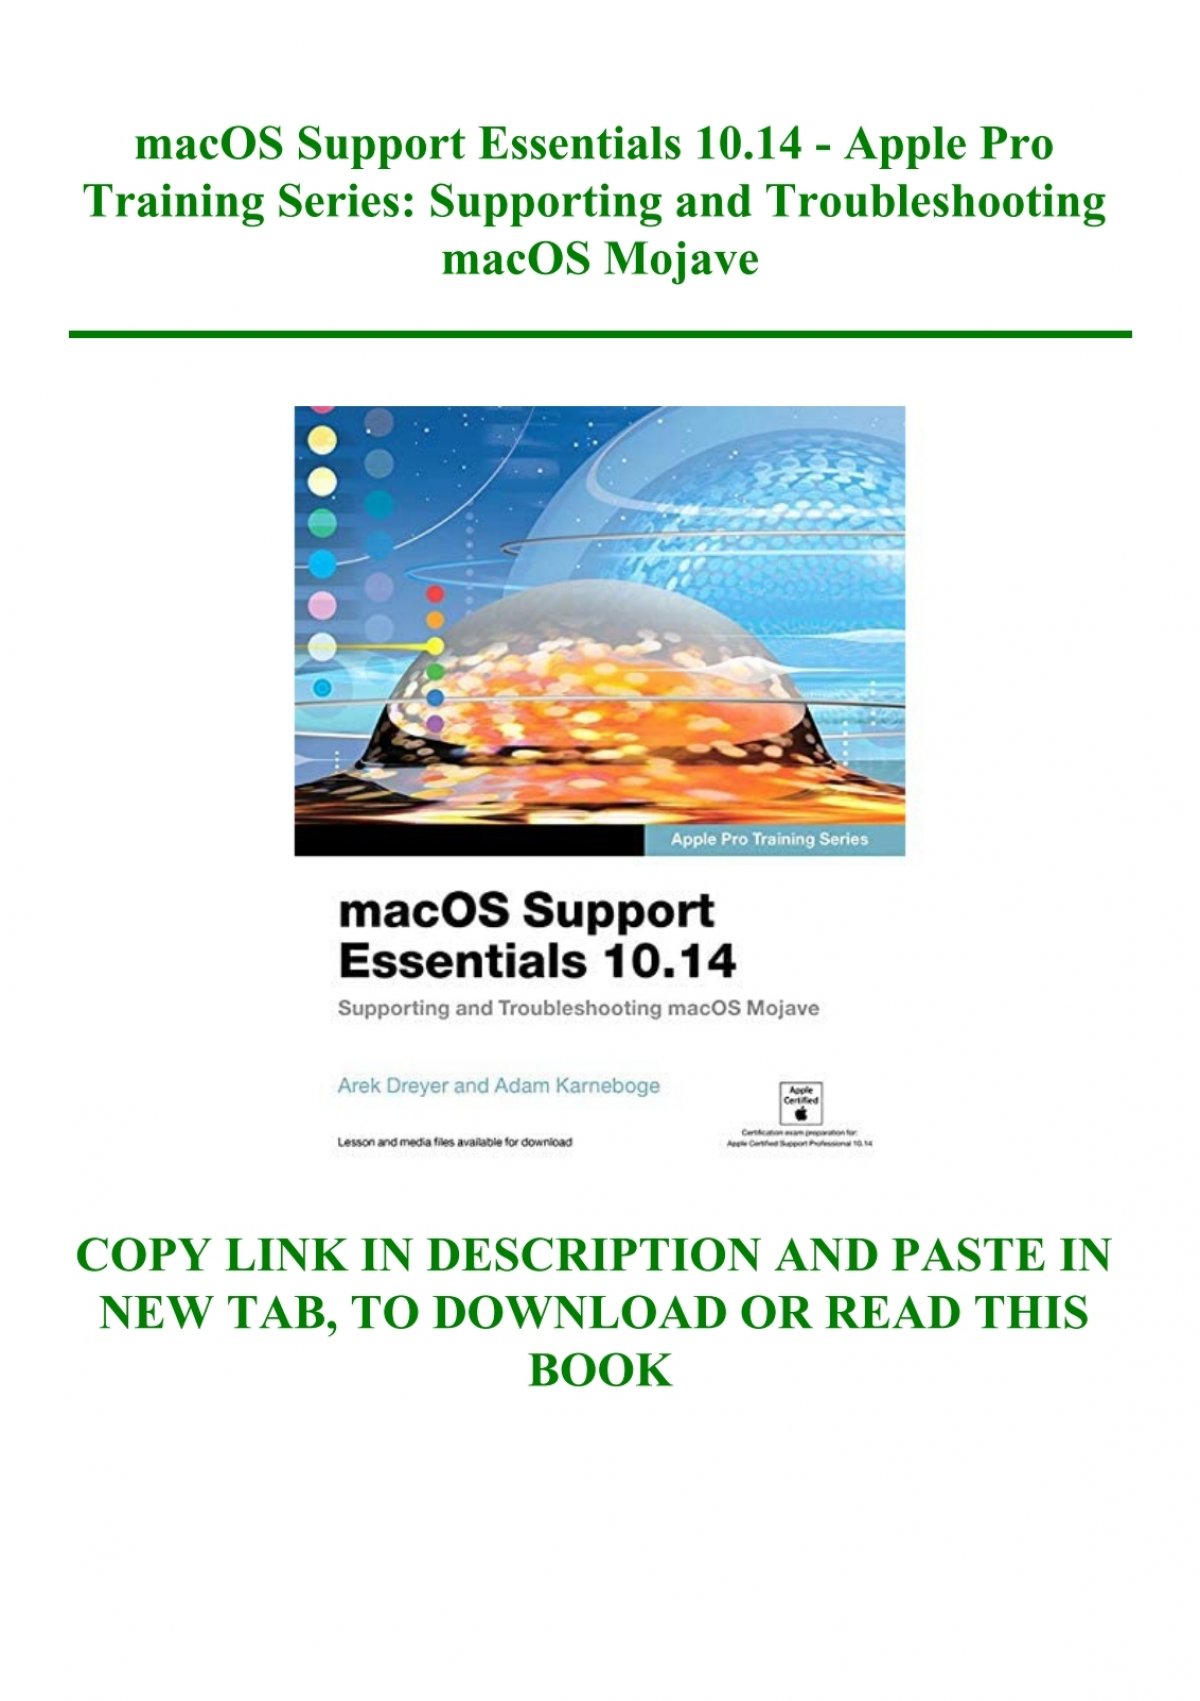 macos support essentials 10.14 pdf torrent